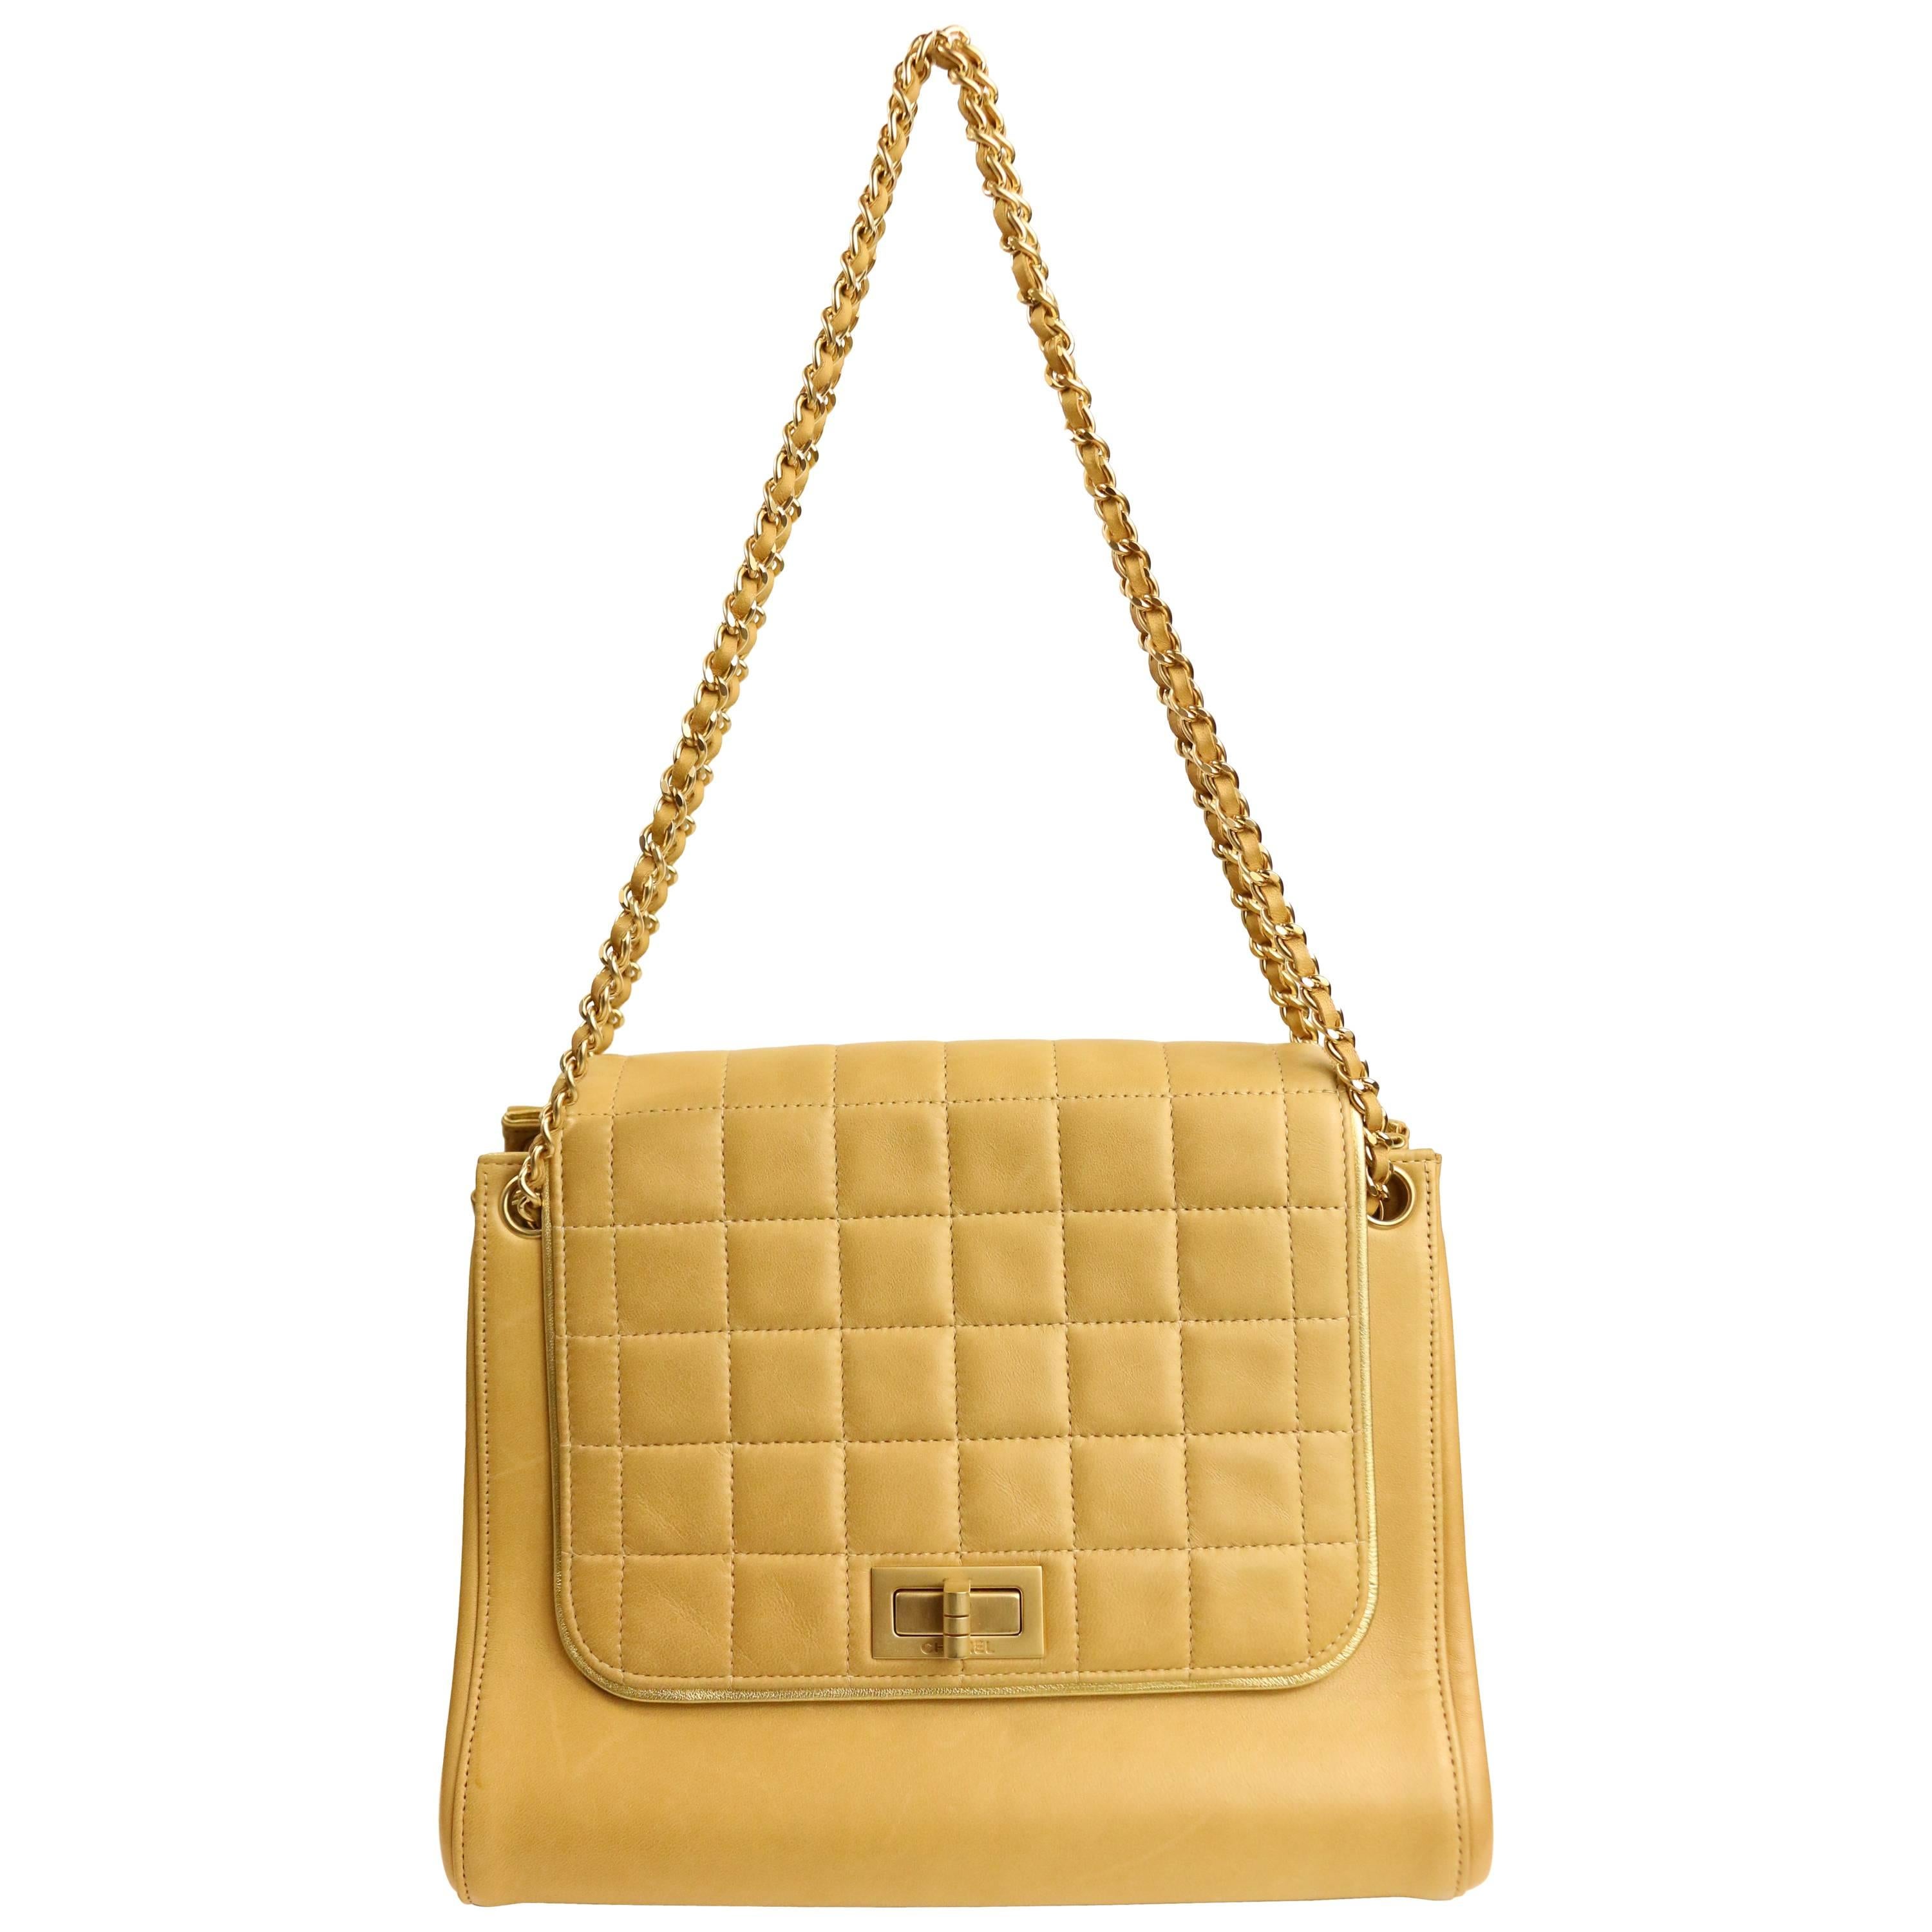 Chanel Camel Leather Flap Bag